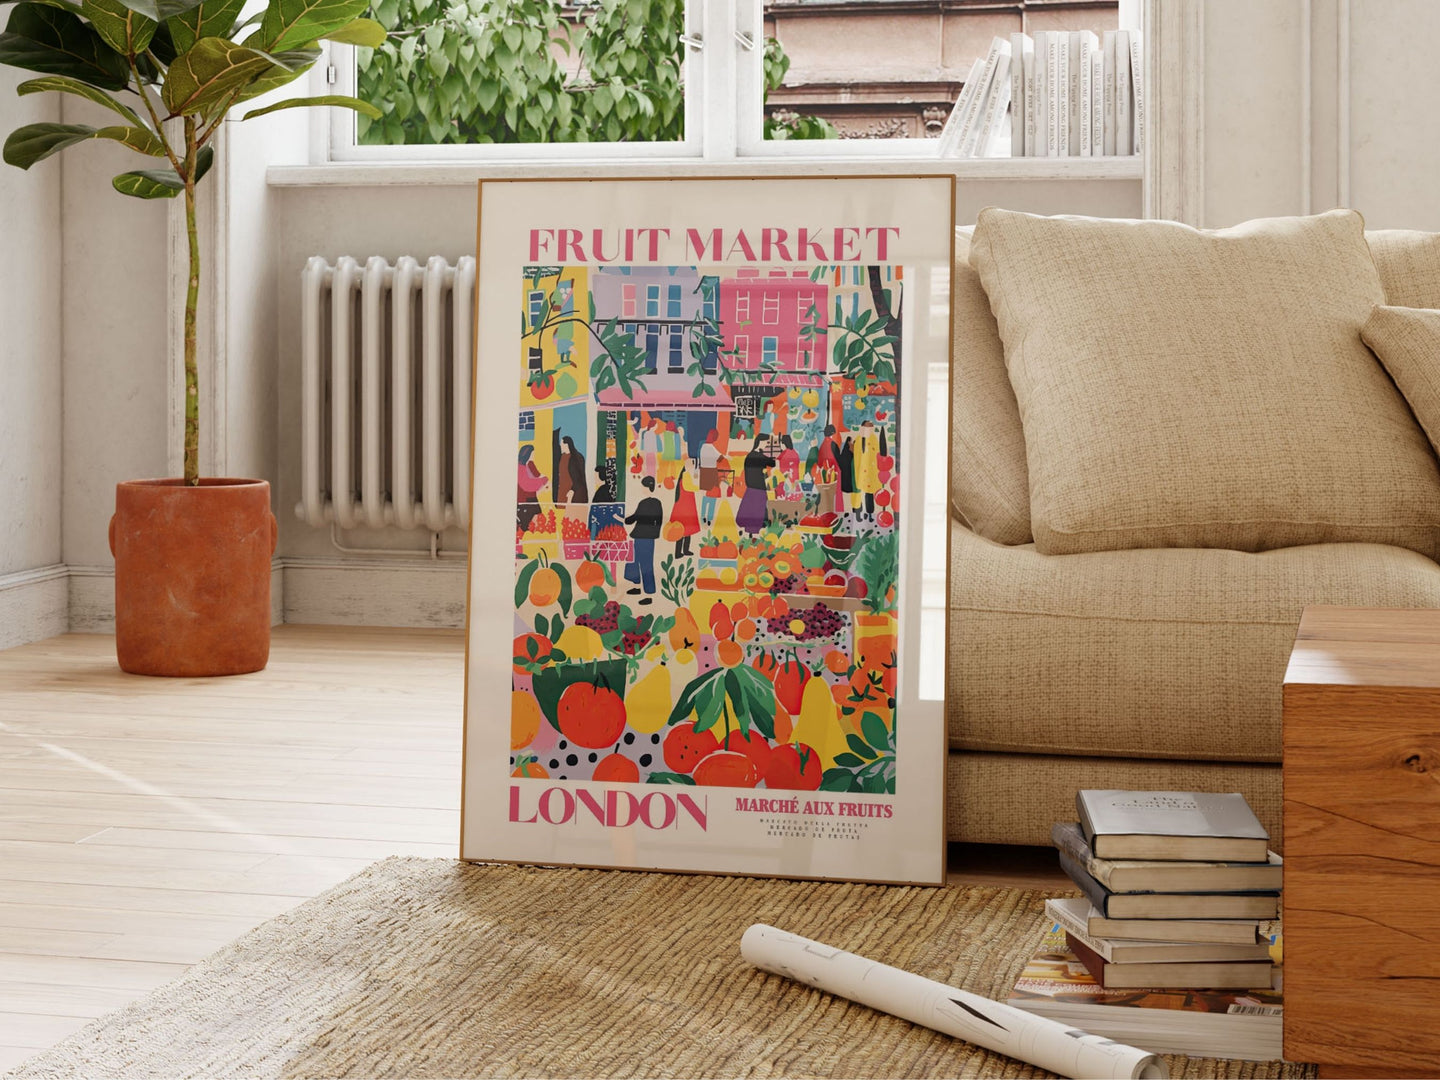 Fruit Market London, London Poster, London Prints, Fruit Market Poster, Fruit Market Print, Abstract Fruit Art, Yellow and Pink, London City